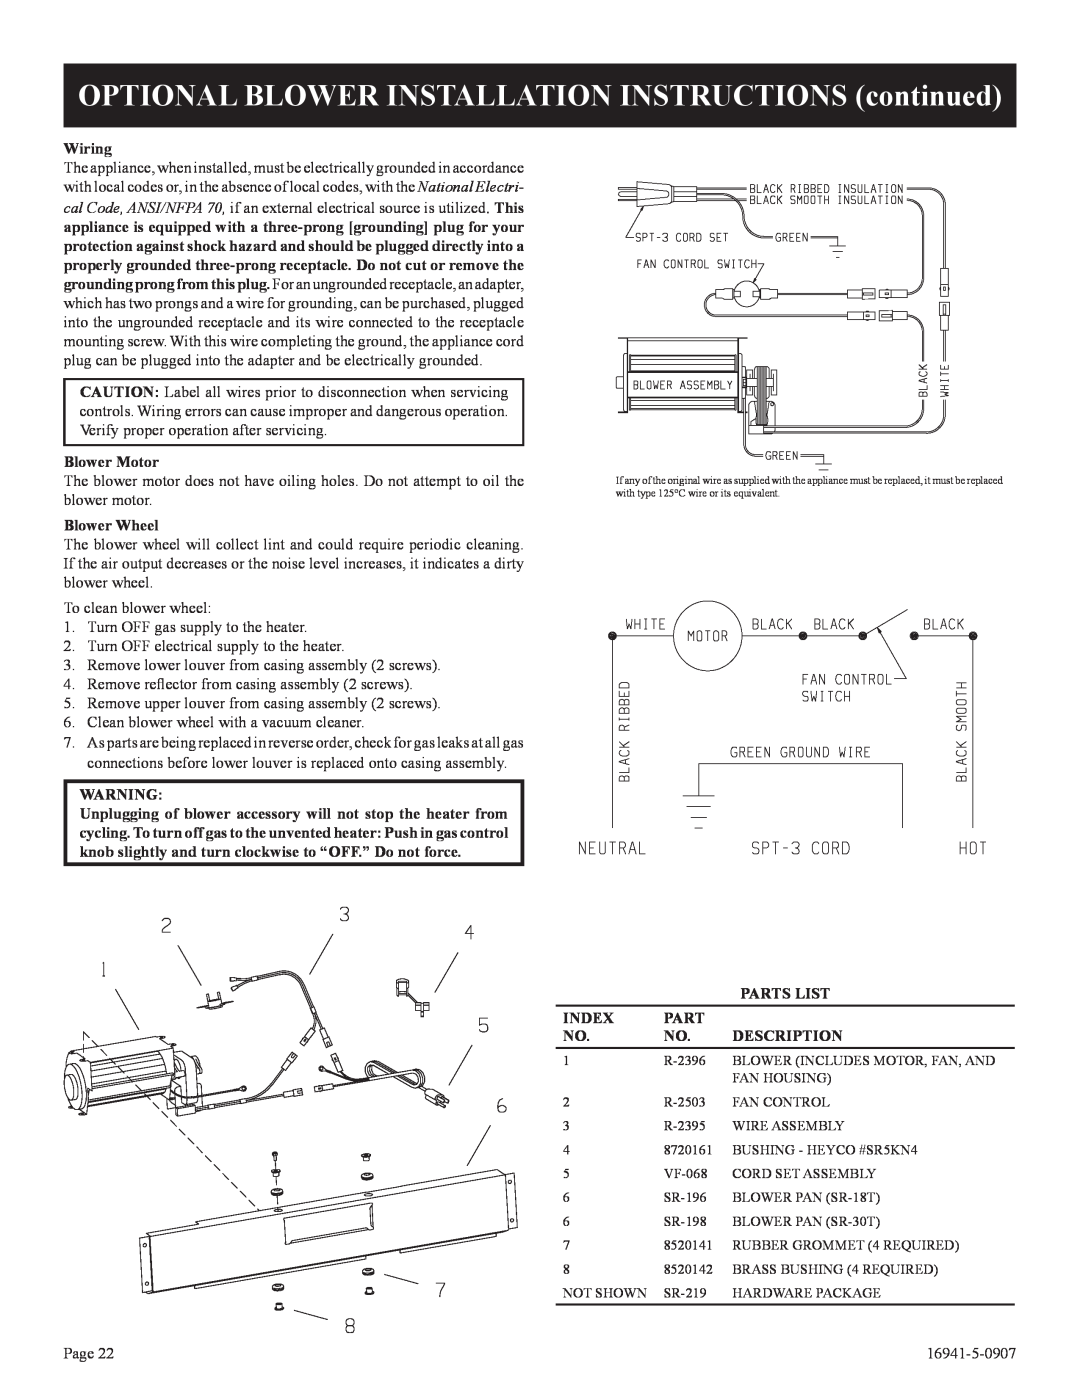 Empire Comfort Systems SR-10T-3 Wiring, Blower Motor, Blower Wheel, Parts List Index Part No. No. Description 